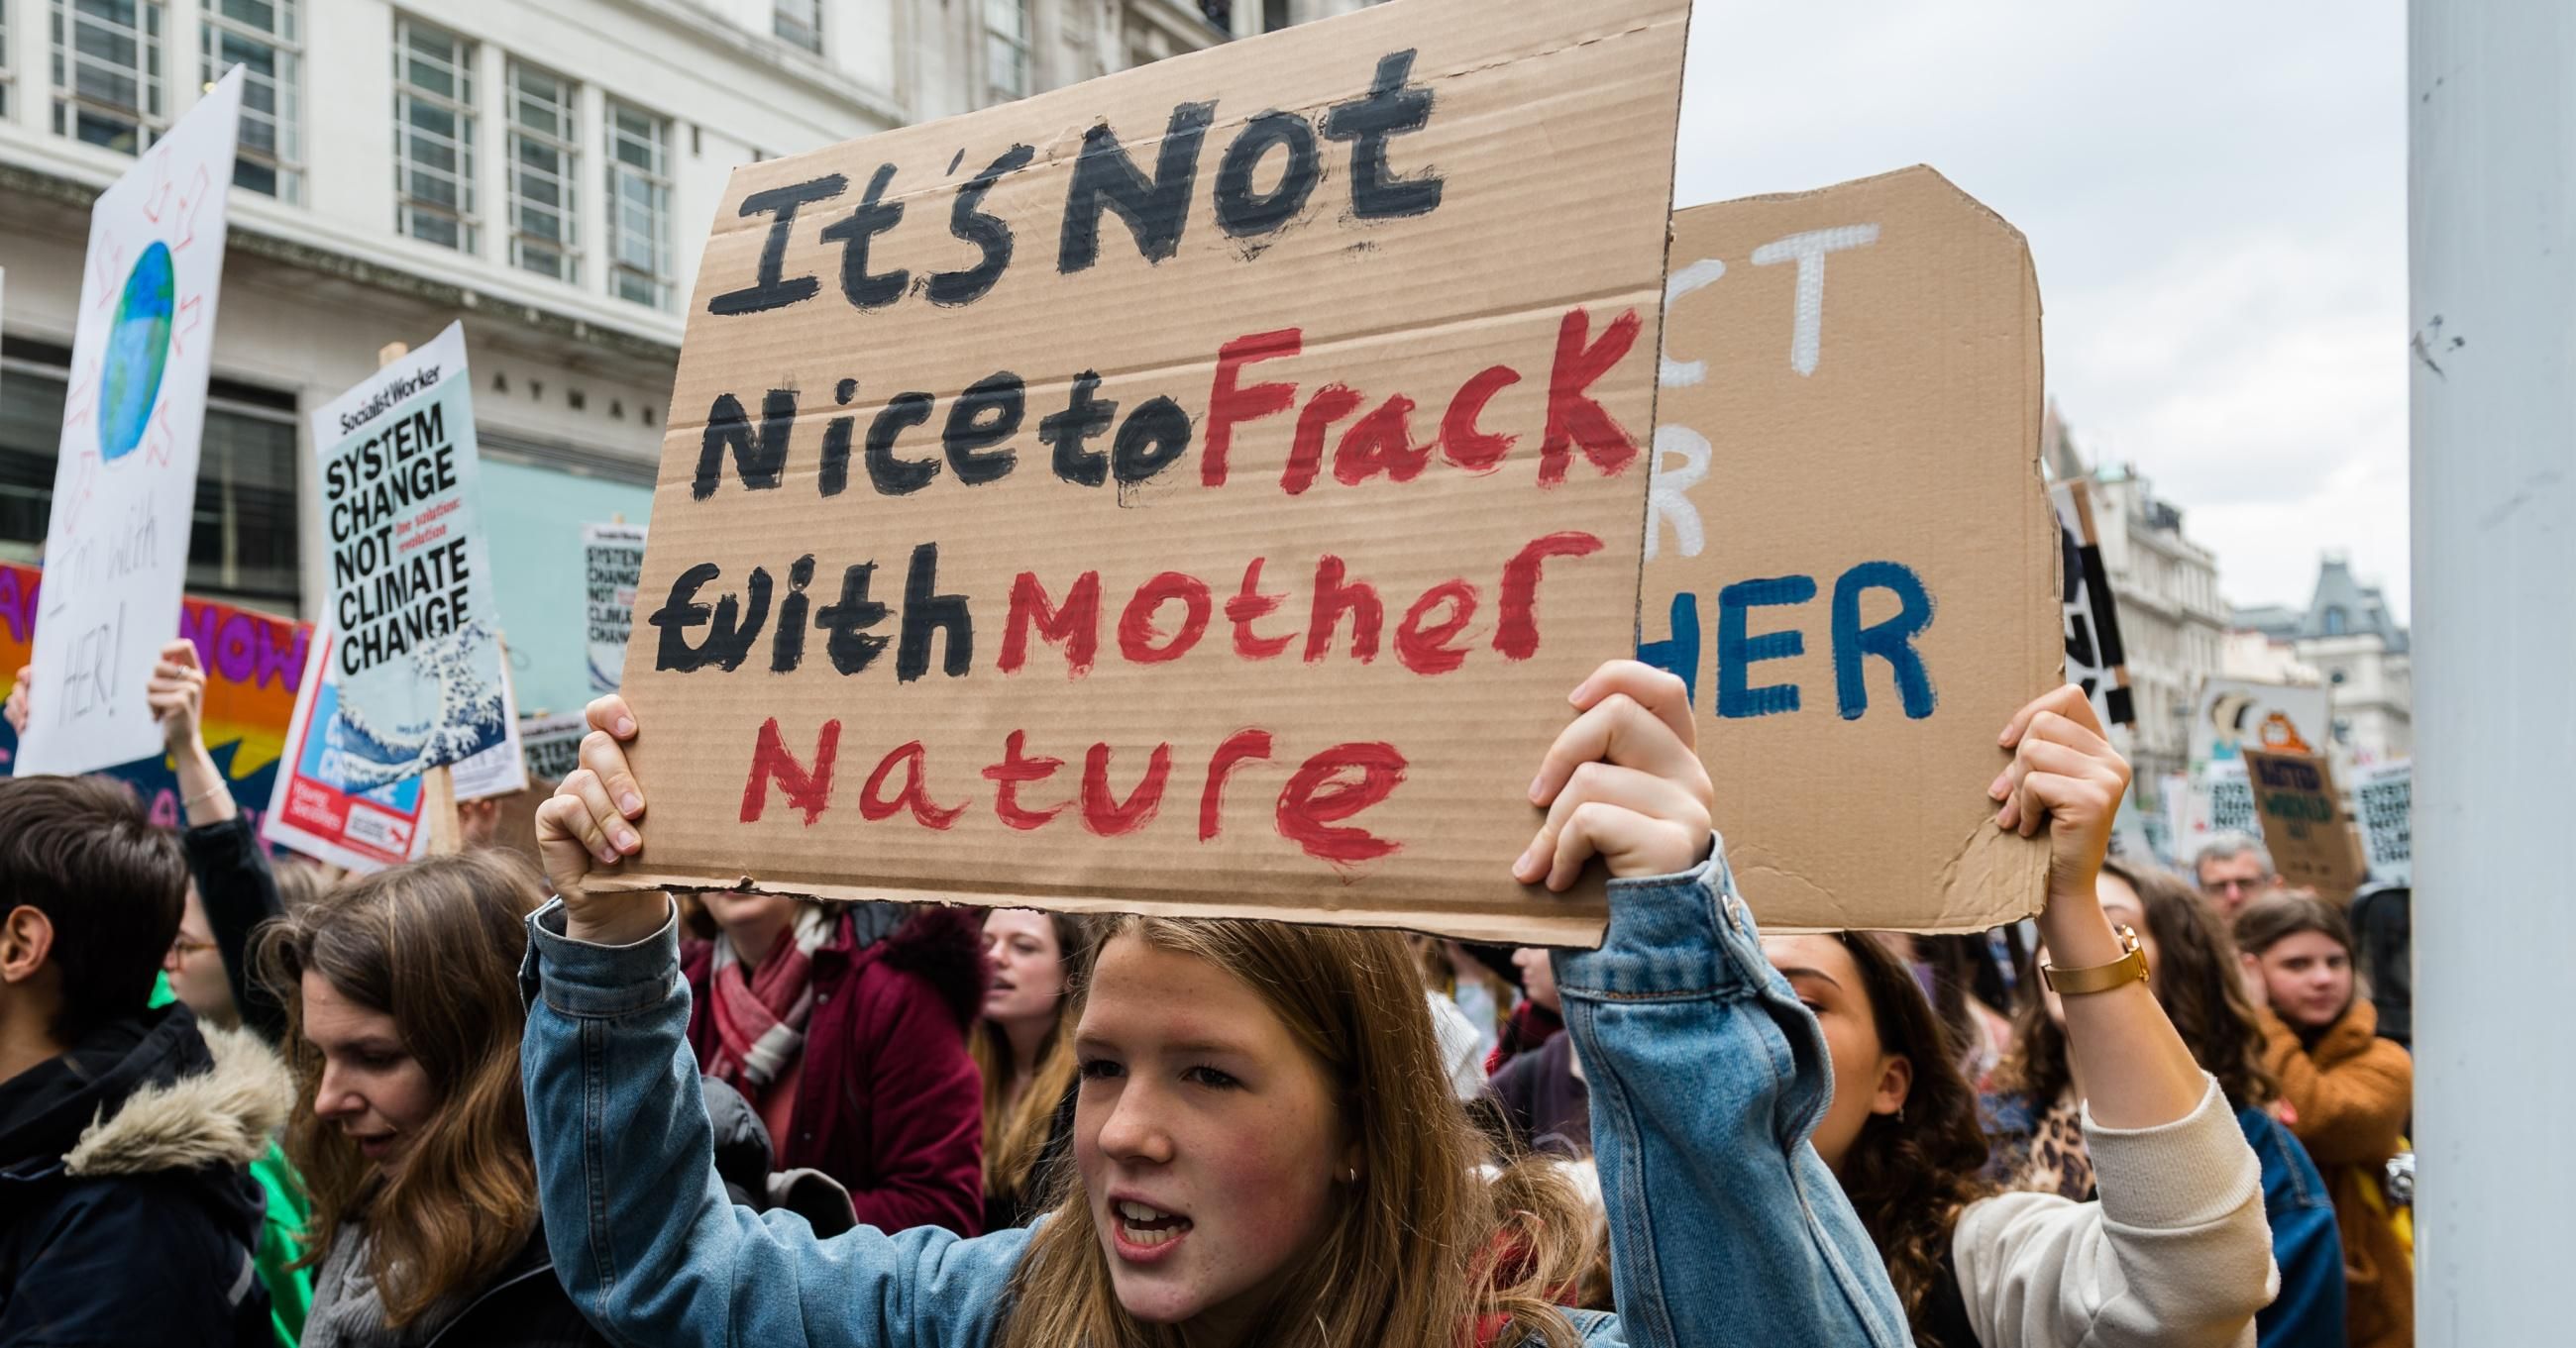 anit-fracking sign